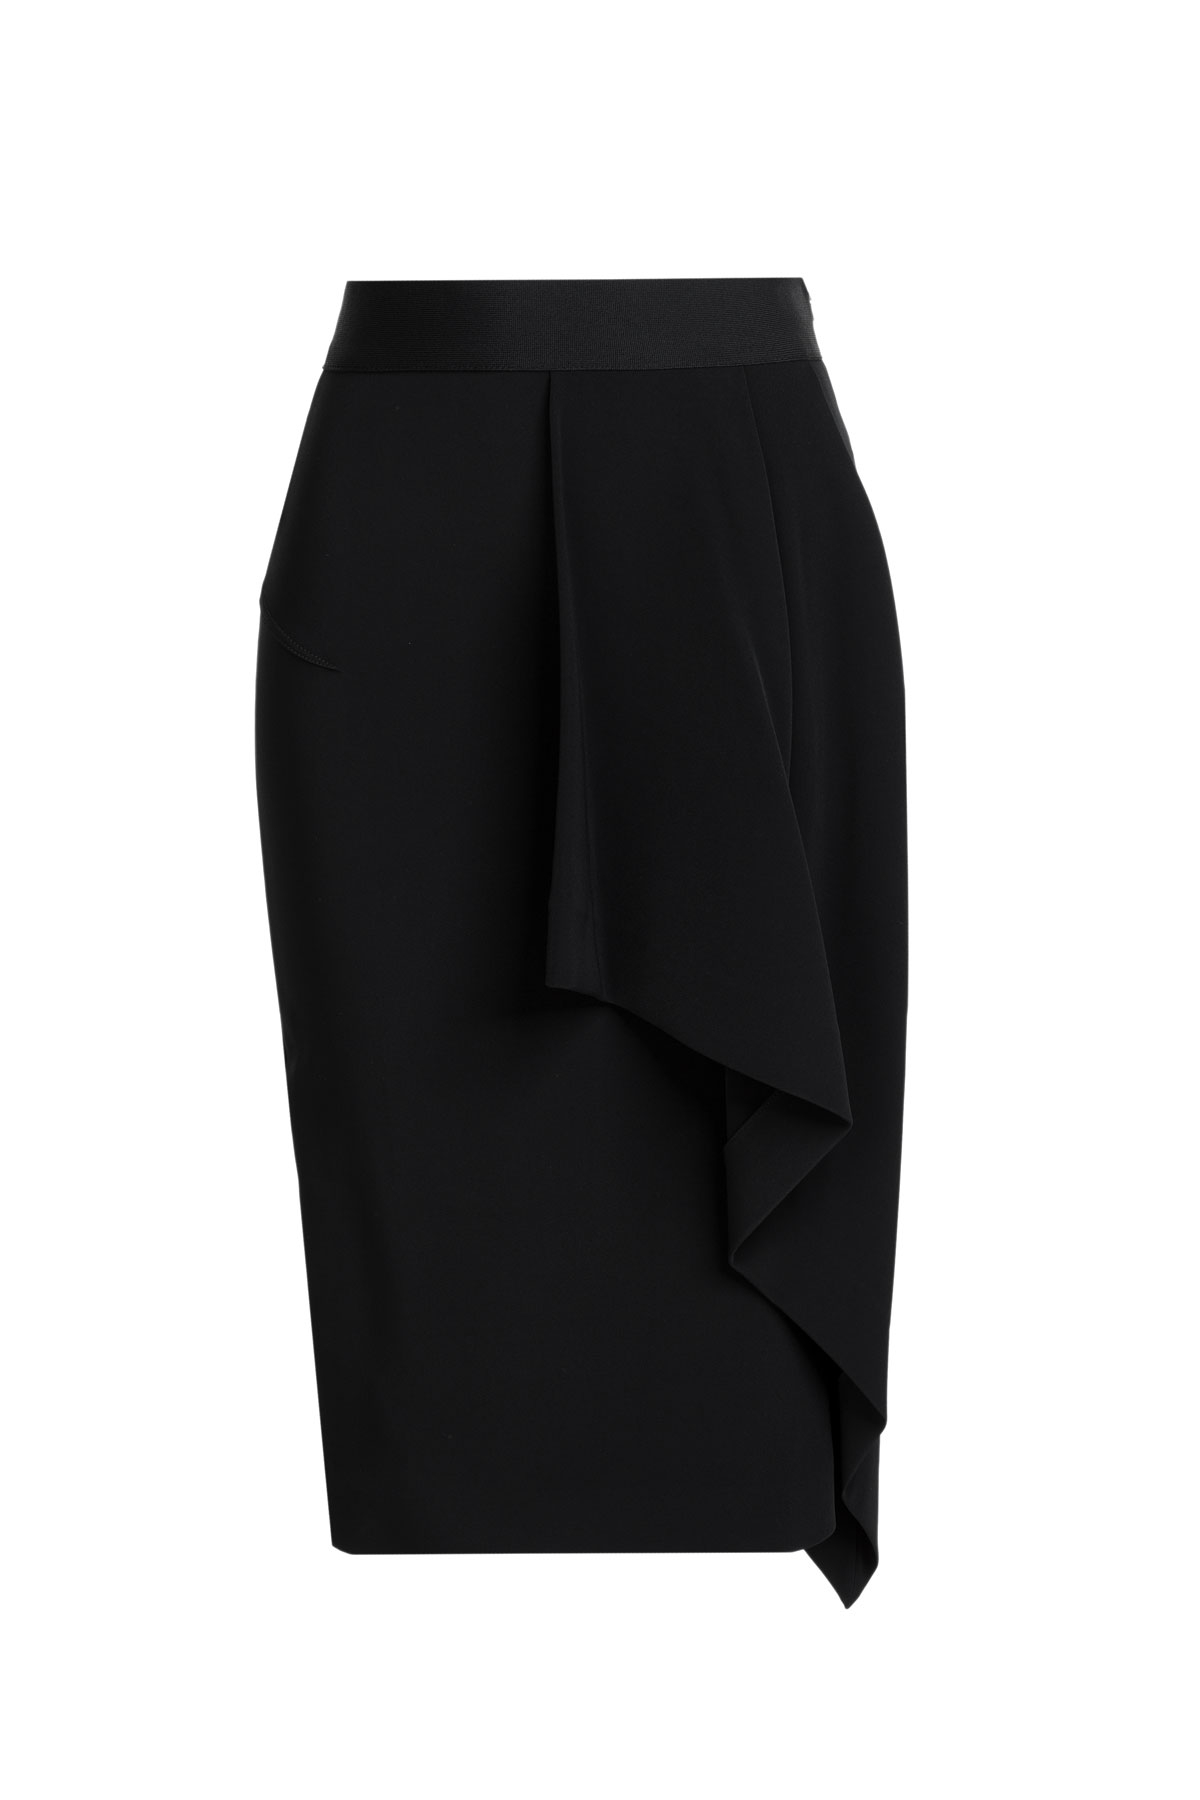 Lyst - Roland mouret Eaton Crepe Pencil Skirt - Black in Black